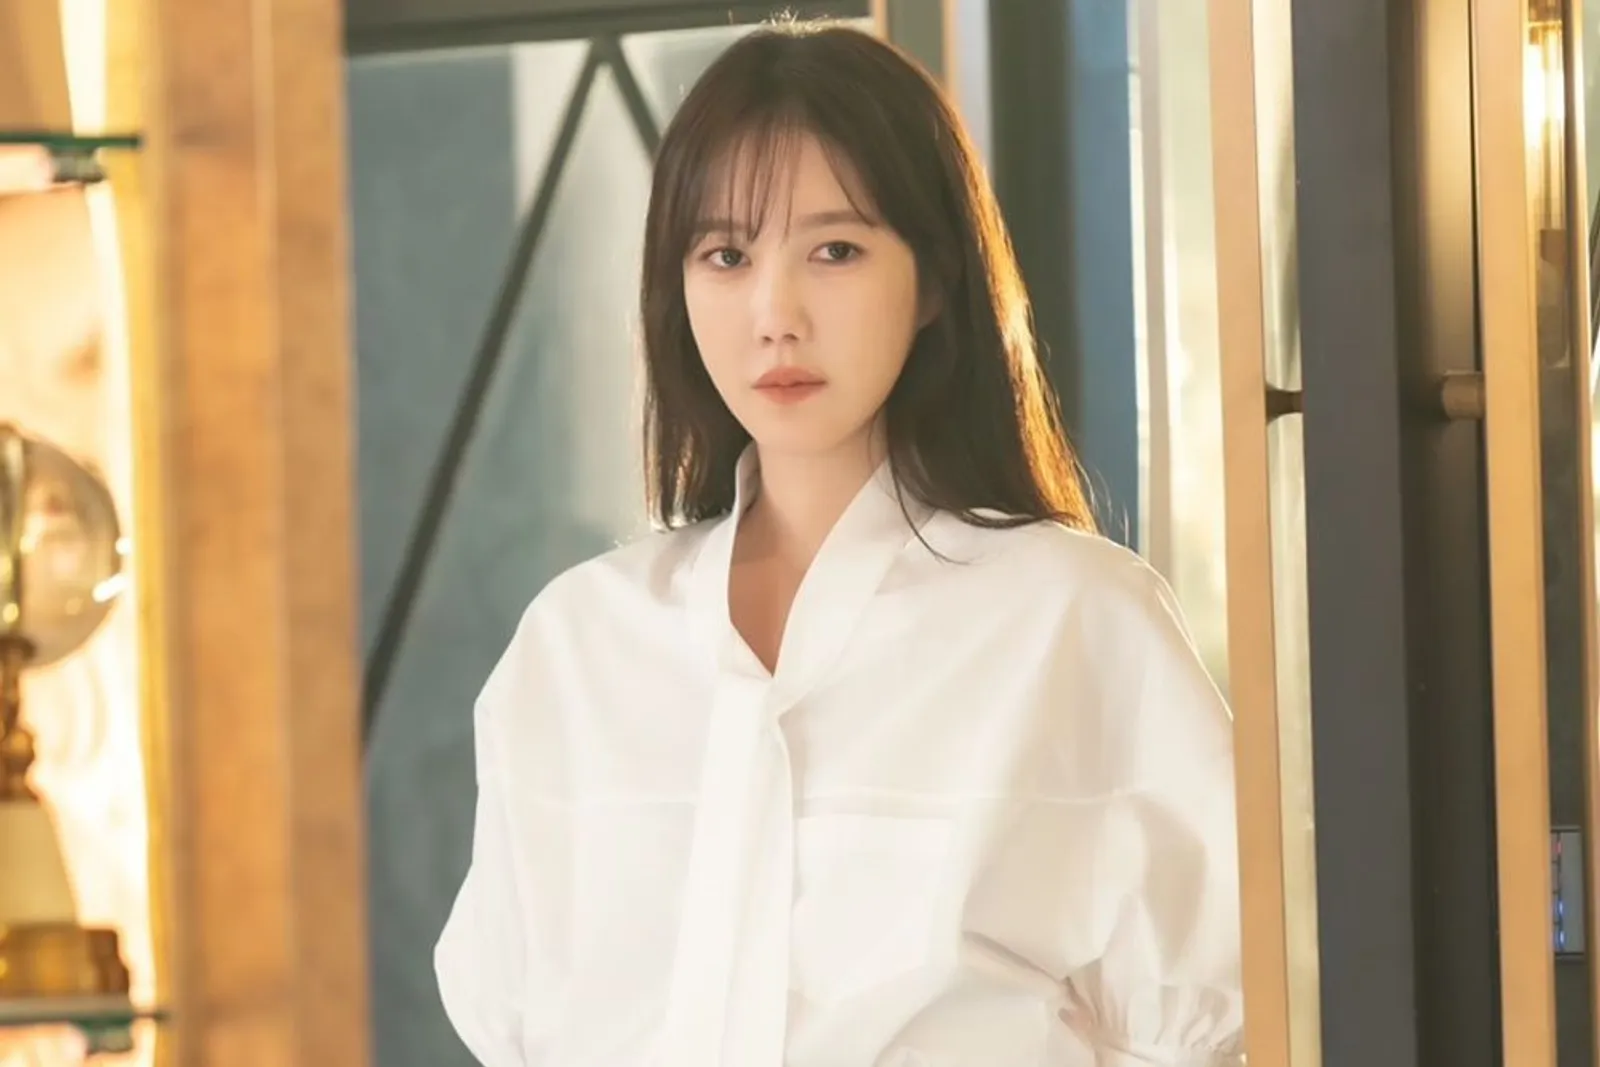 Harga Pakaian Shim Su Ryeon di Drama Korea Penthouse 3, Serba Branded!